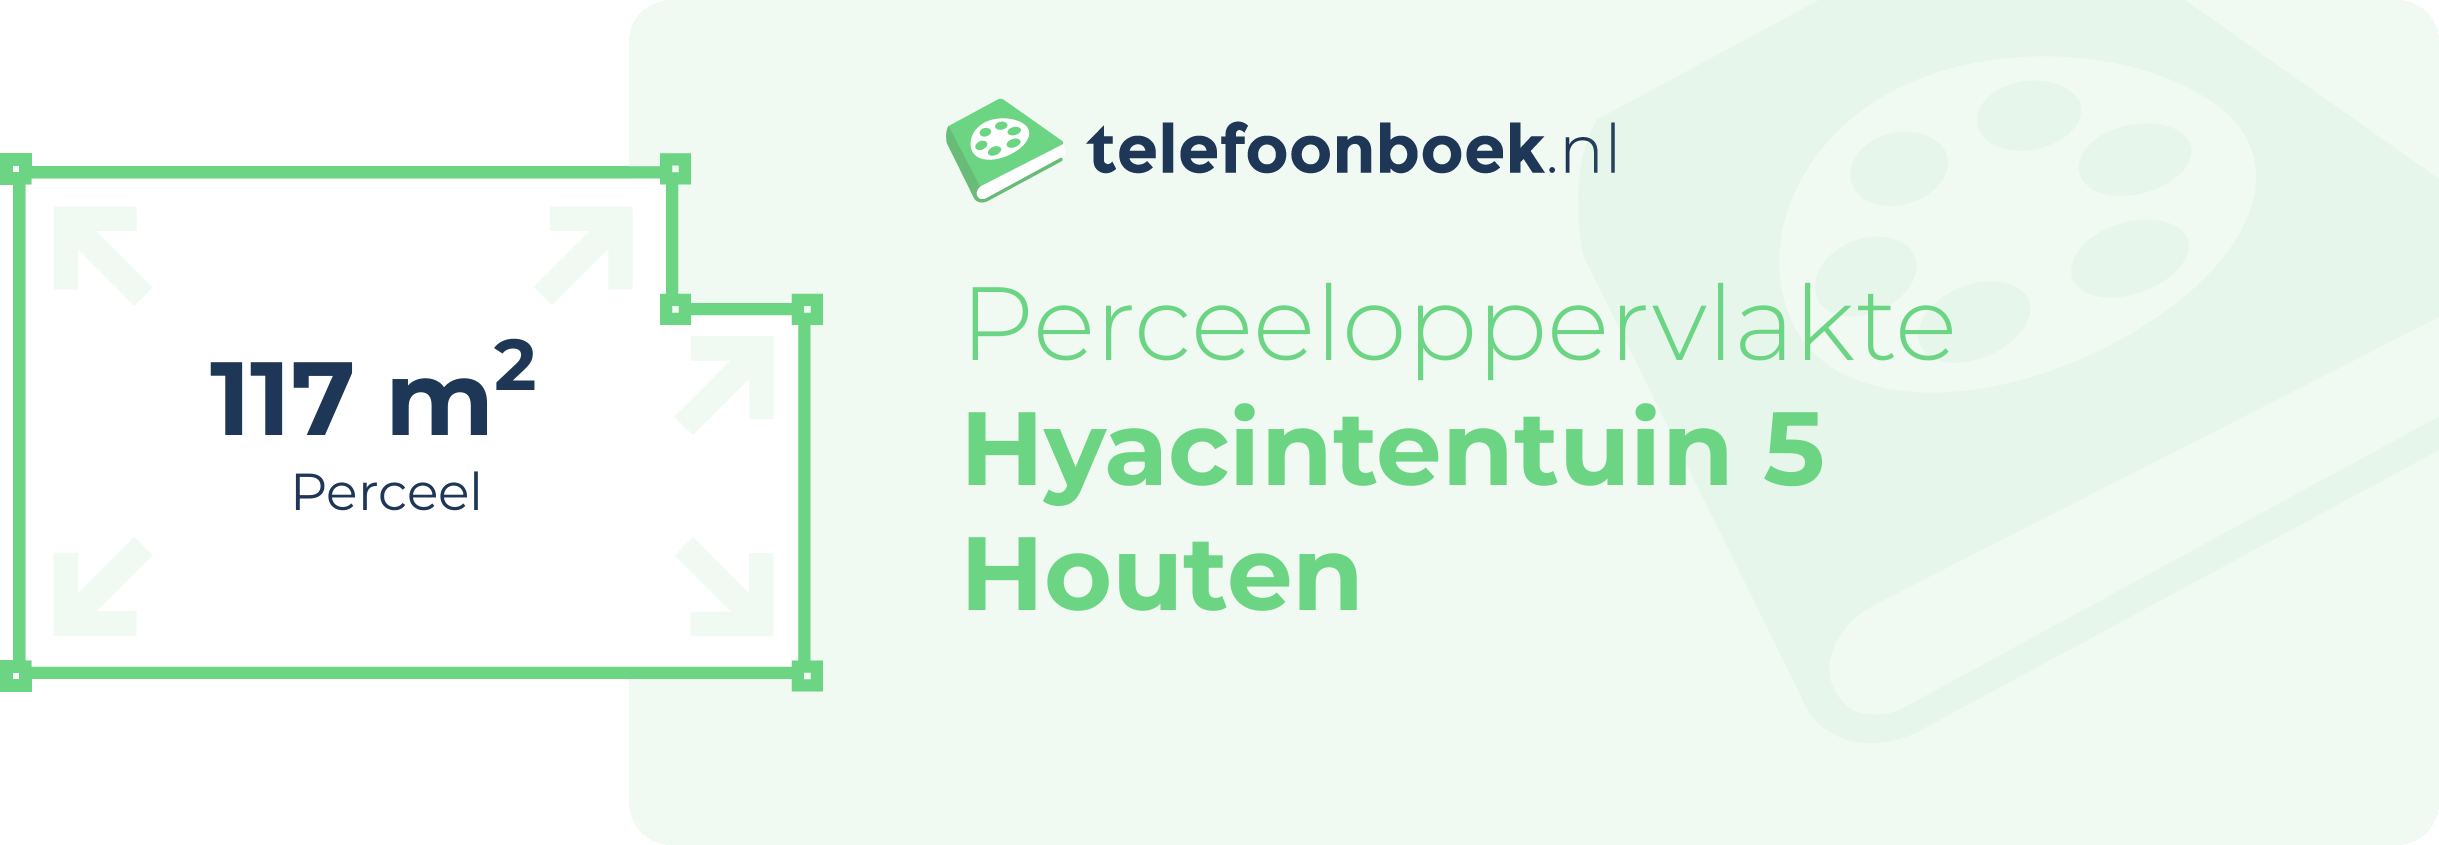 Perceeloppervlakte Hyacintentuin 5 Houten